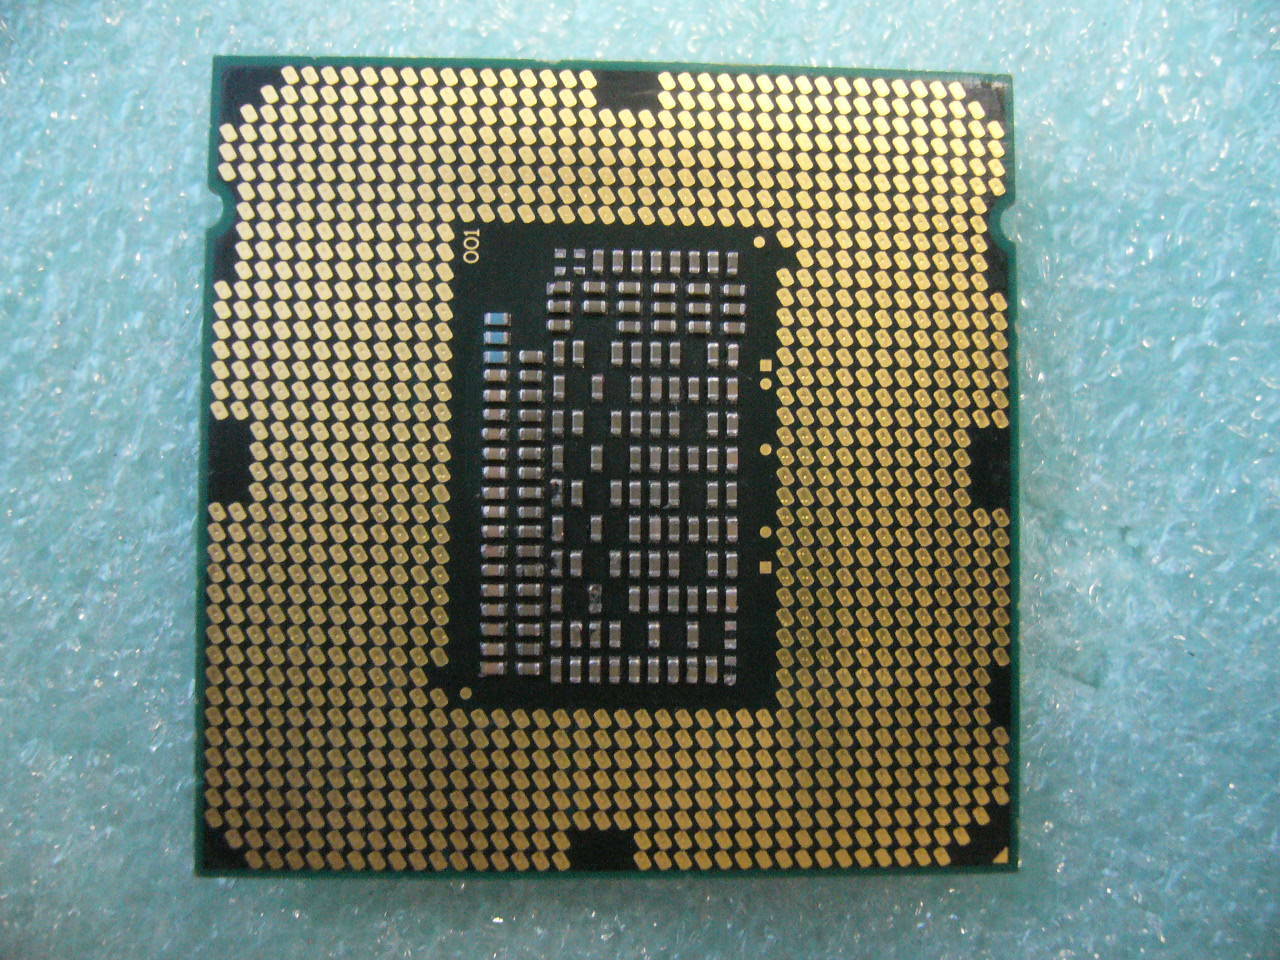 QTY 1x Intel CPU i5-2400S Quad-Cores 2.50Ghz LGA1155 SR00S NOT WORKING - Click Image to Close